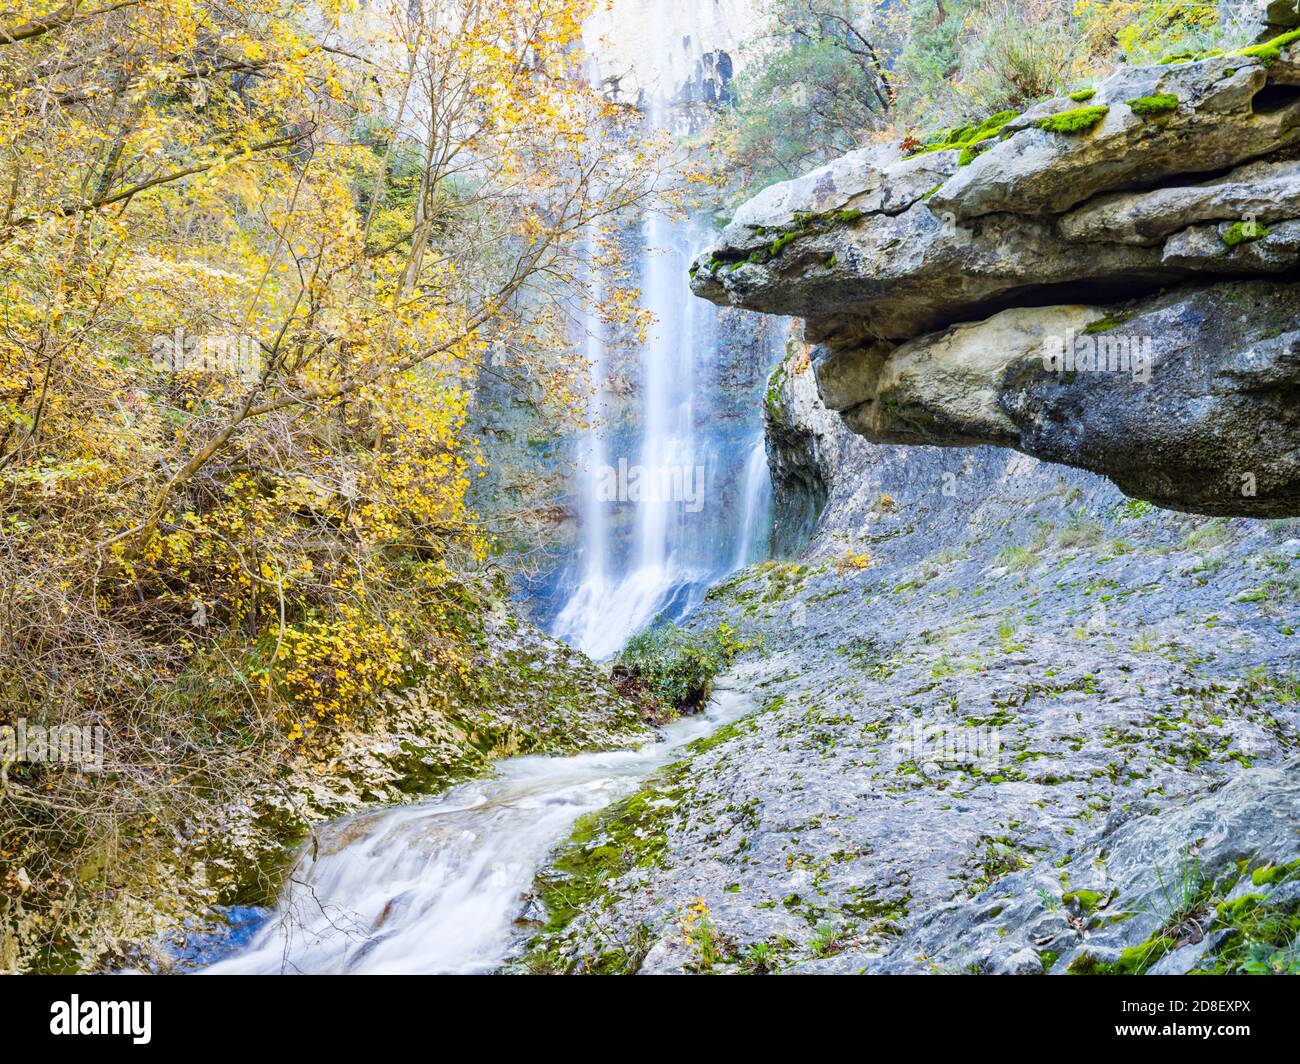 Big boulder rock balancing balance in Benkovski slap waterfall near Pican in Croatia Europe Stock Photo